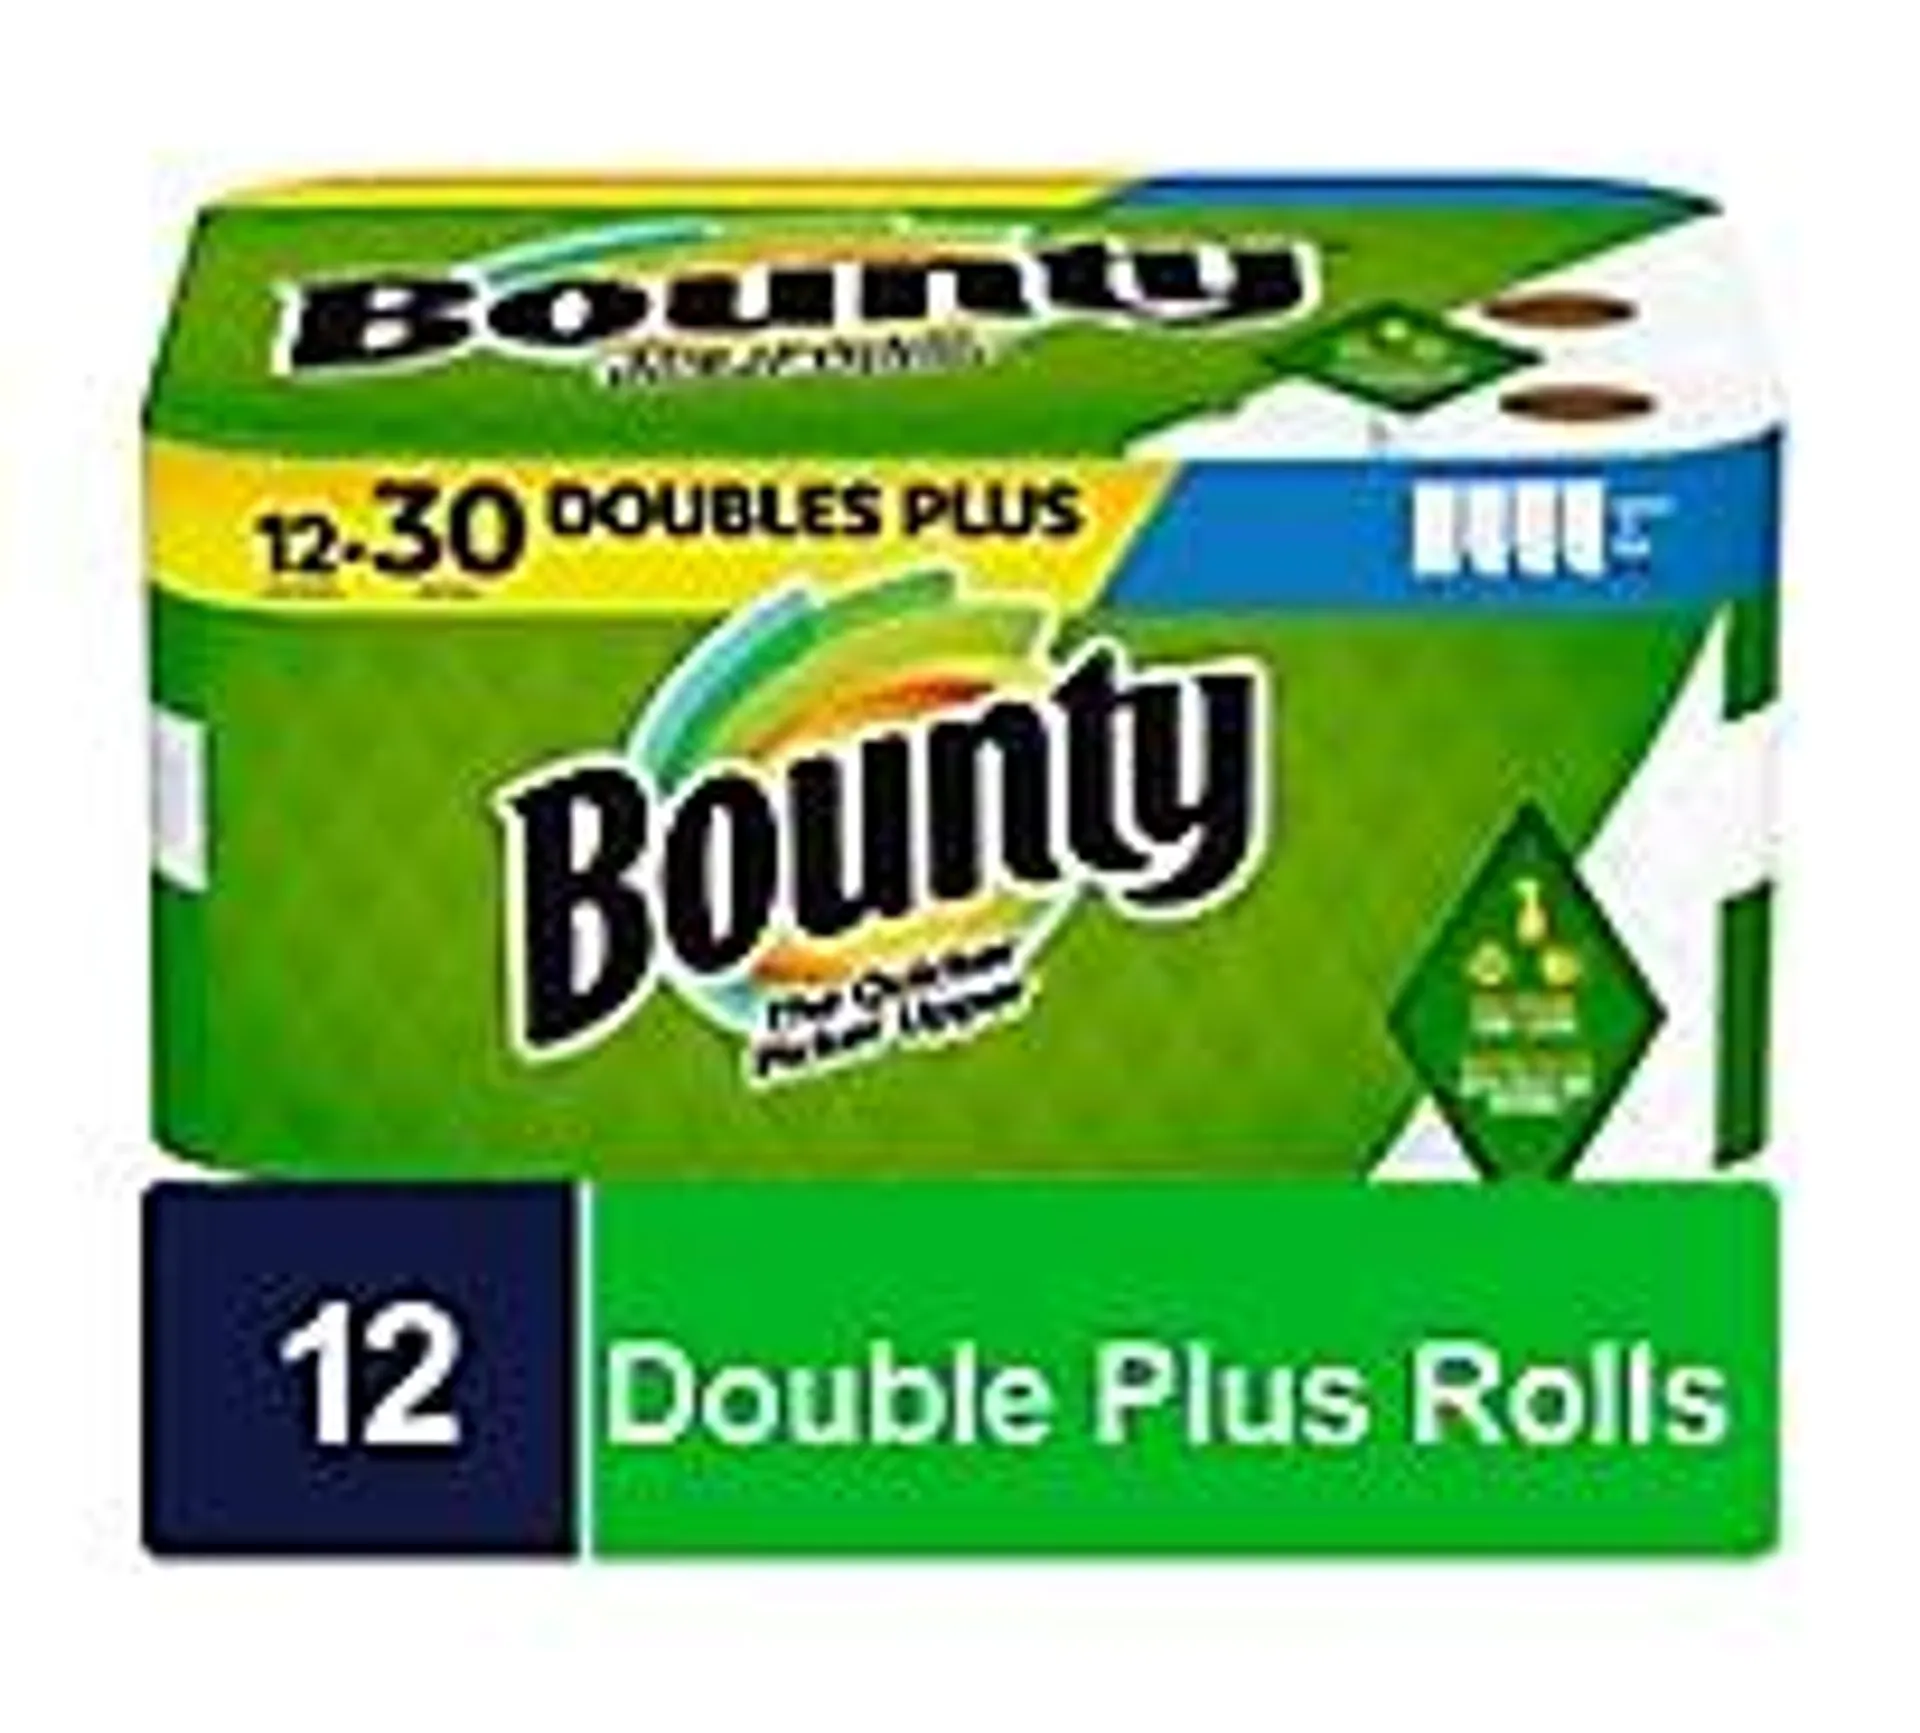 Bounty 12 Double Plus Select-a-size White - 12 RL